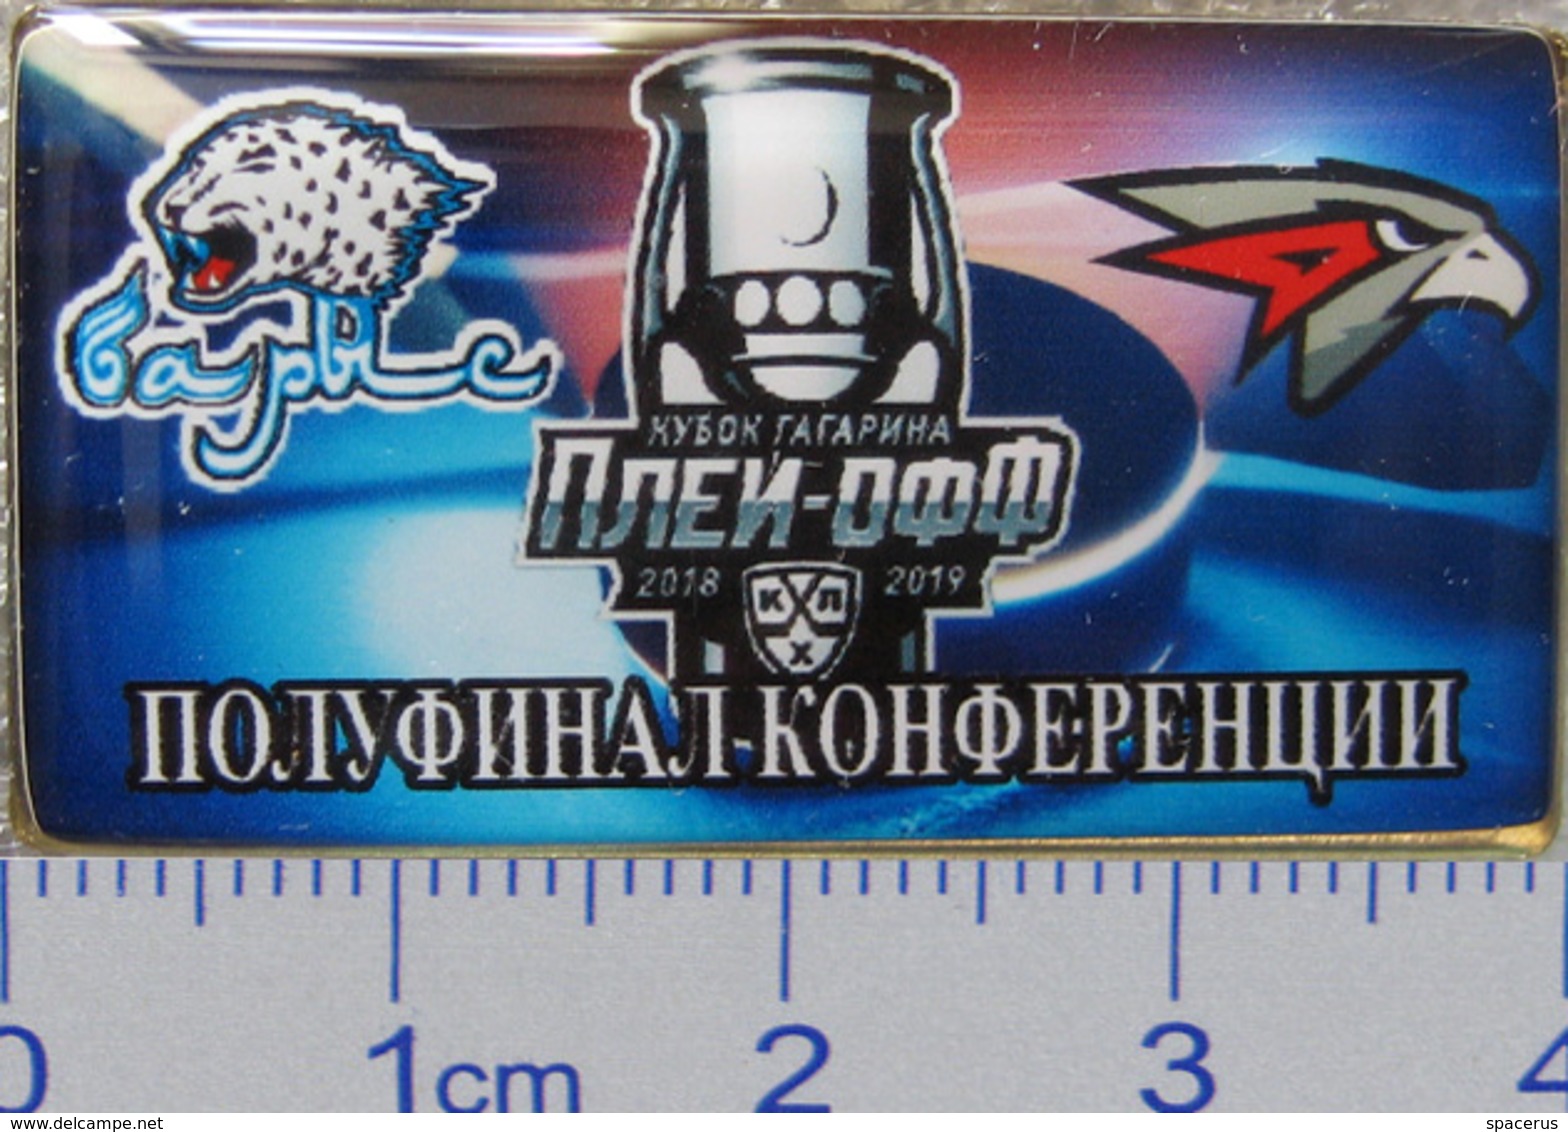 686-12 Space - Sport Russian Pin Hocky Gagarin Cup Barys (Nur-Sultan) - Avangard (Omsk) 2018-19 (40х22mm) - Space